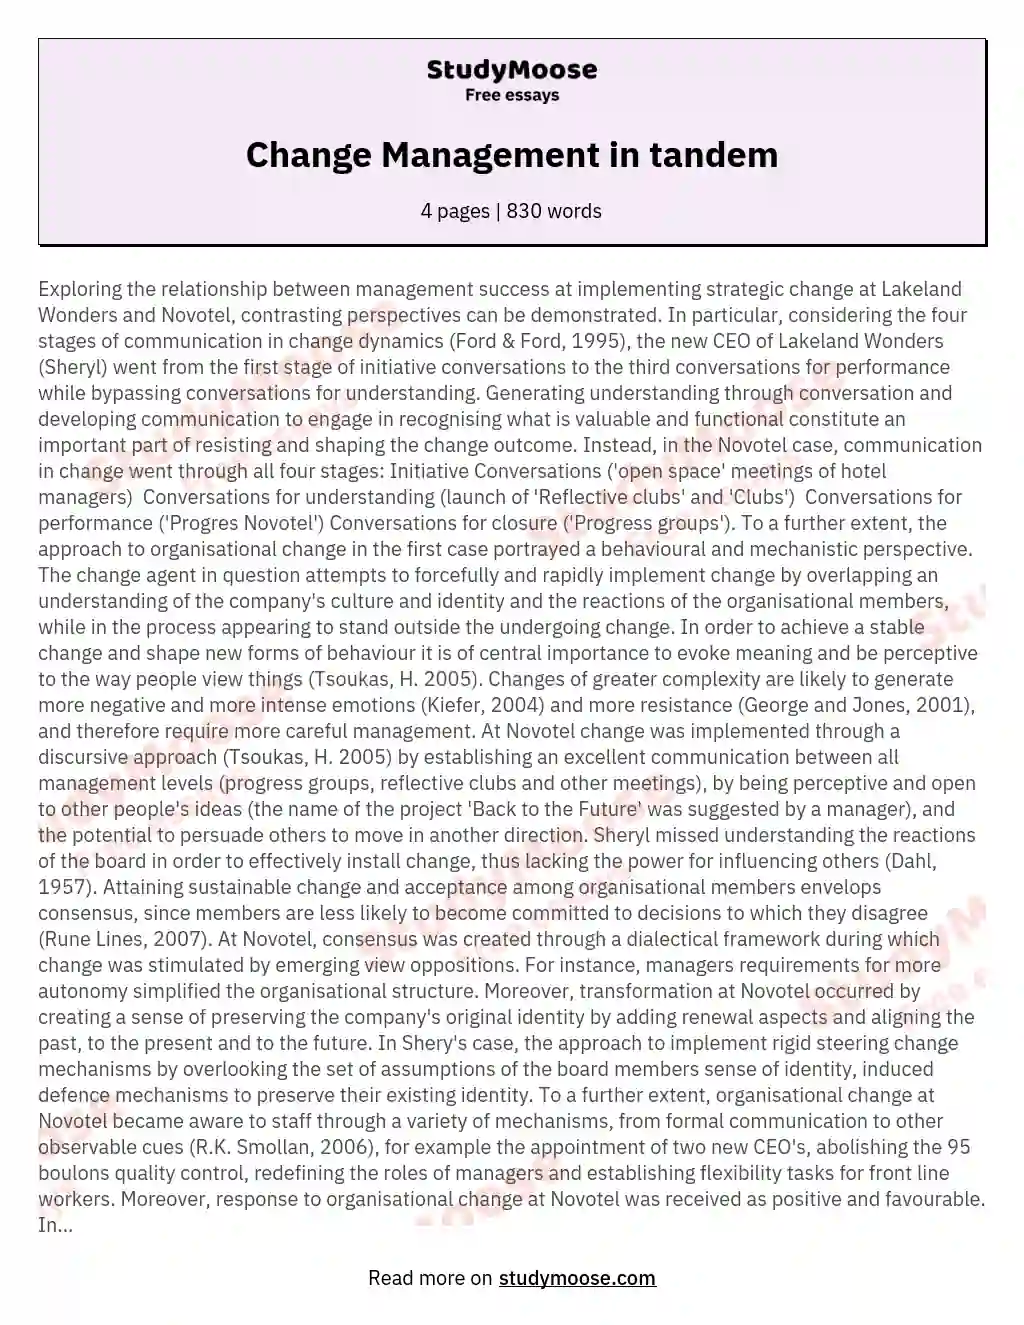 Change Management in tandem essay